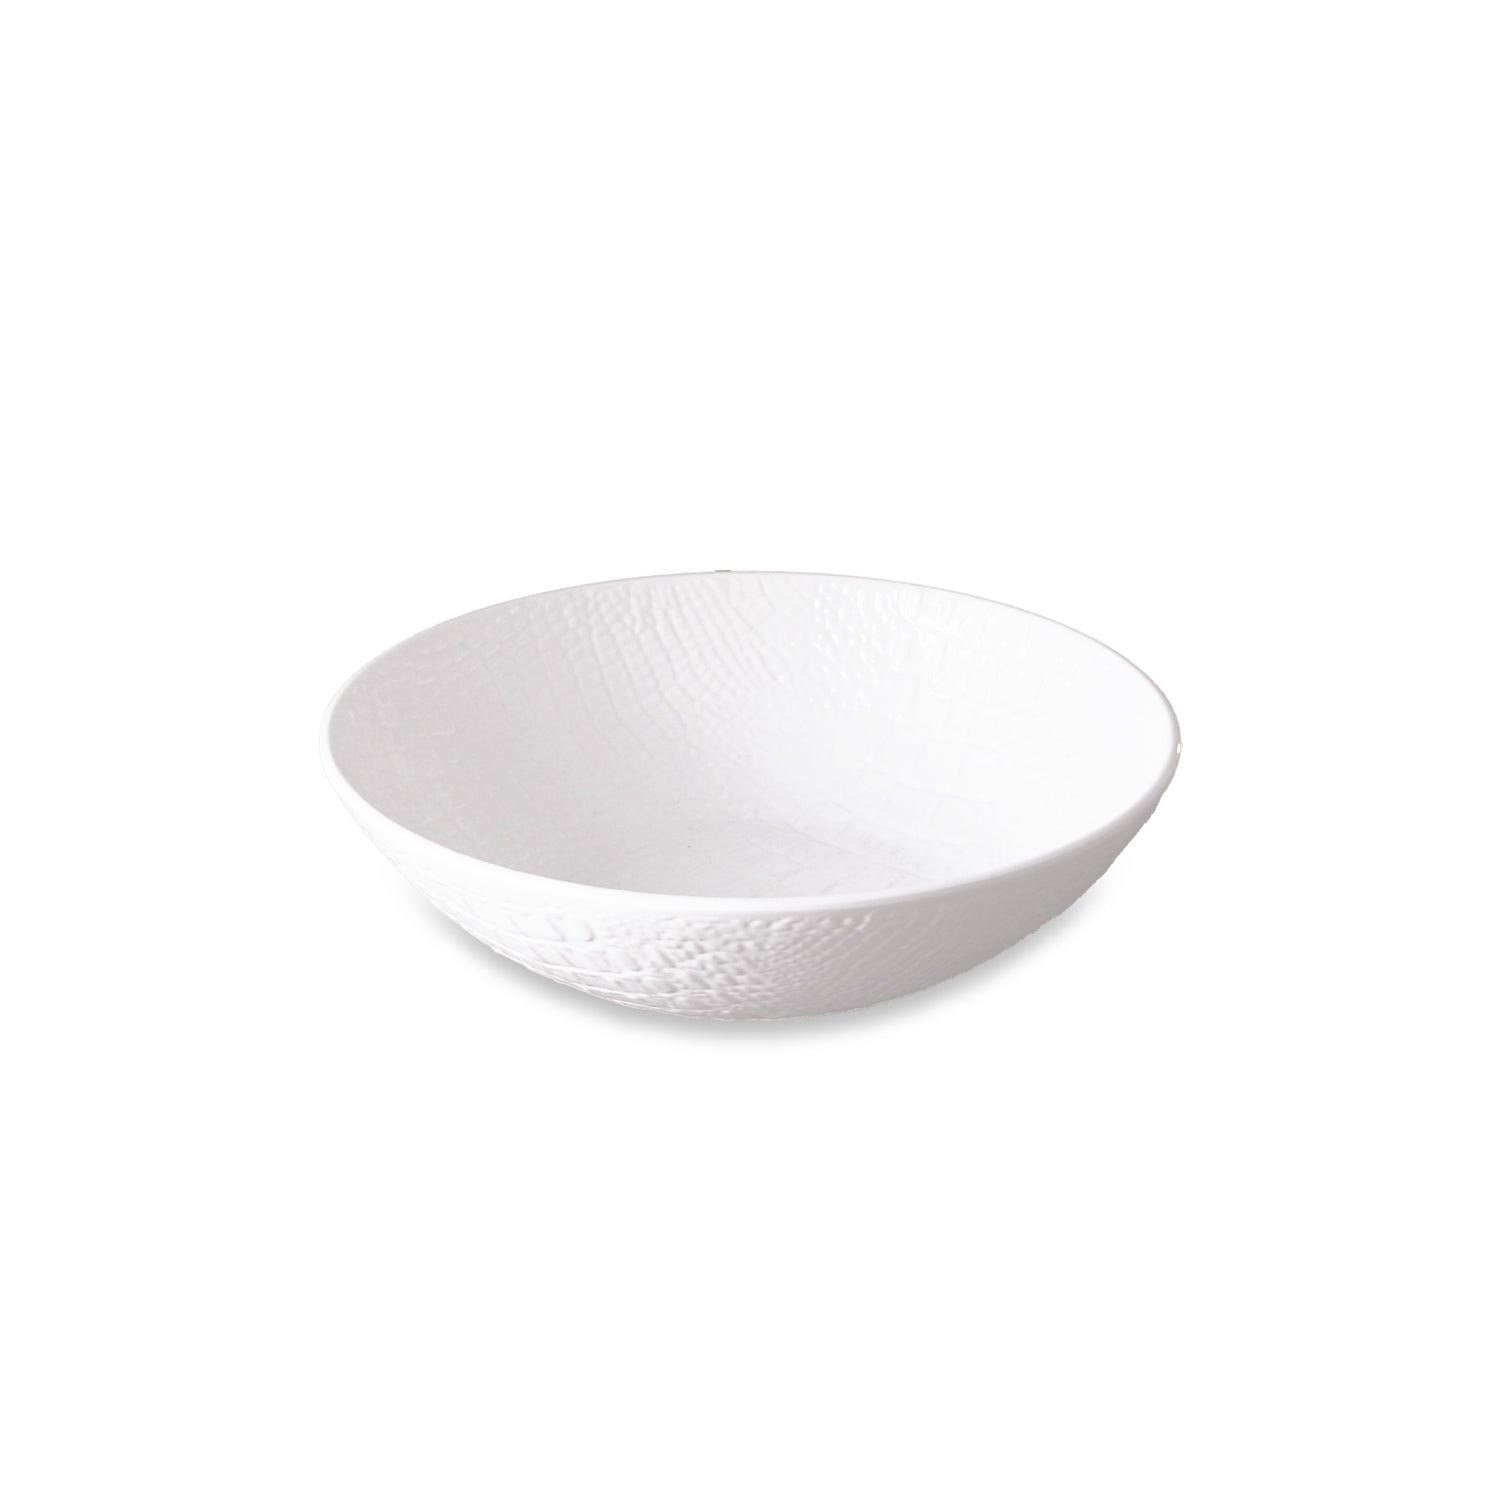 VIDA Croc Large Bowl (White)